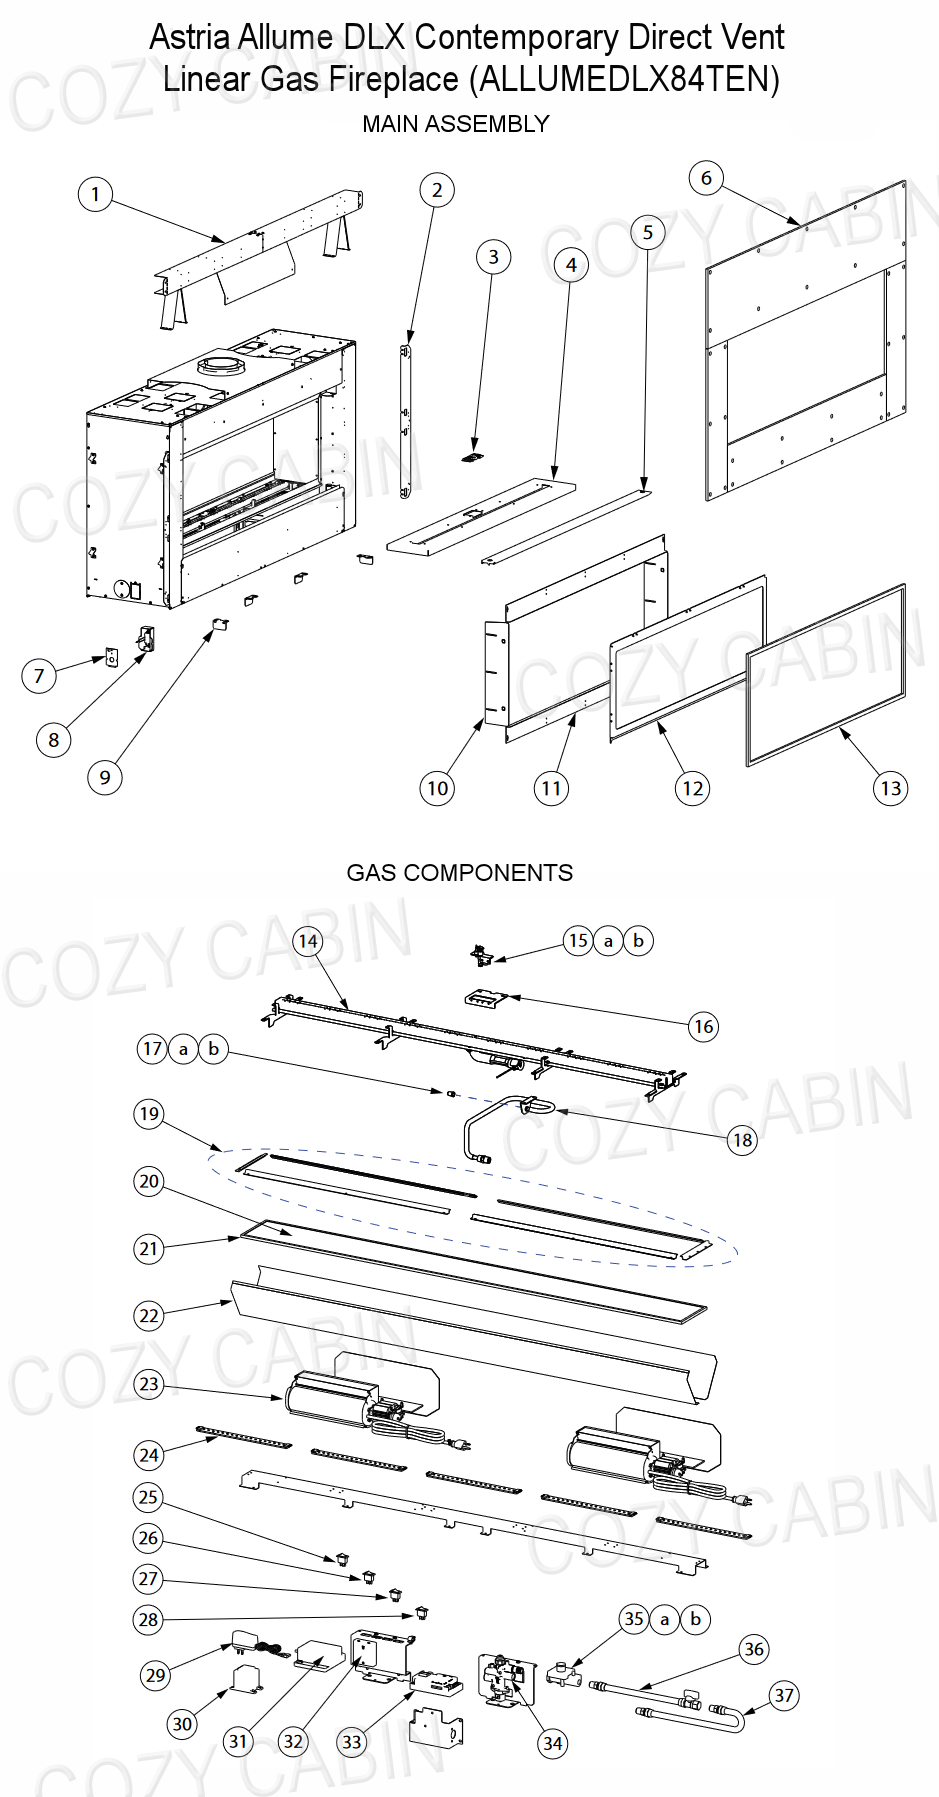 Astria Allume DLX Contemporary Direct Vent Linear Gas Fireplace (ALLUMEDLX84TEN) #ALLUMEDLX84TEN